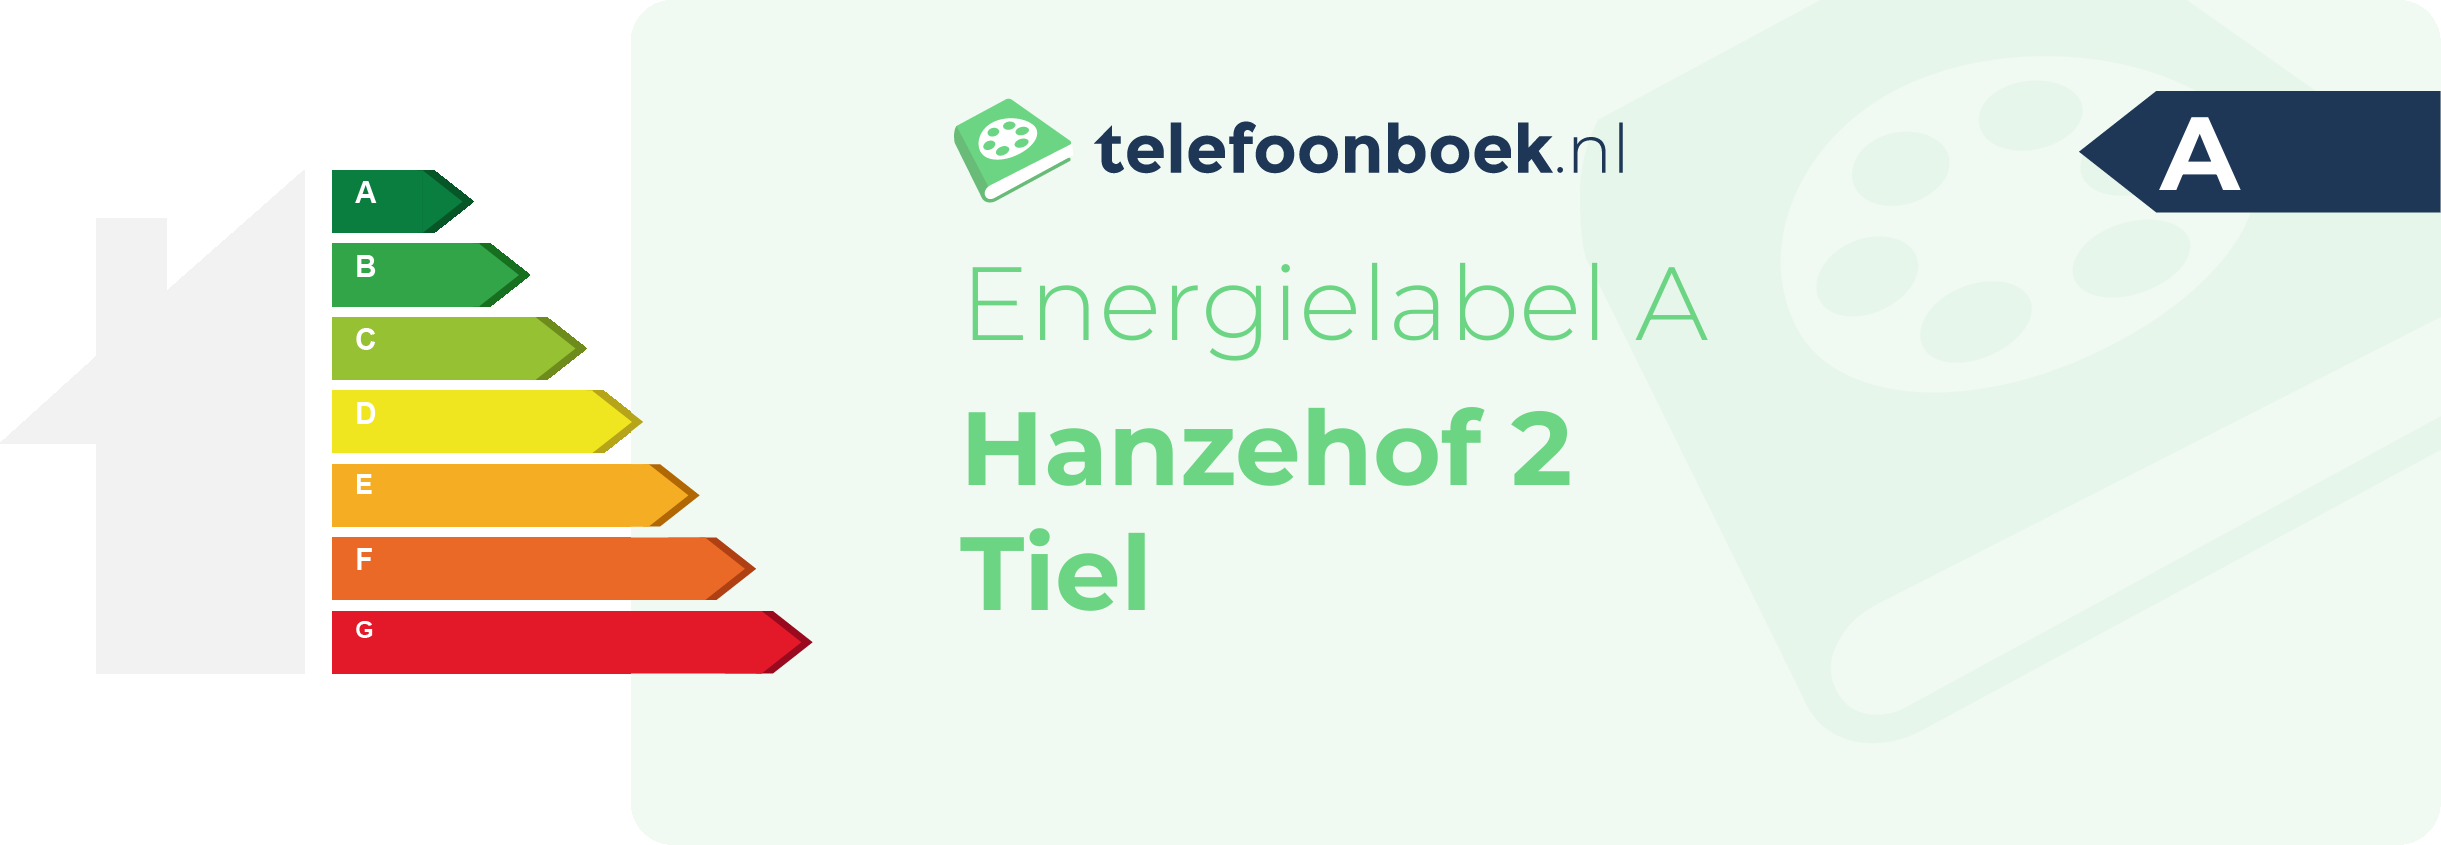 Energielabel Hanzehof 2 Tiel